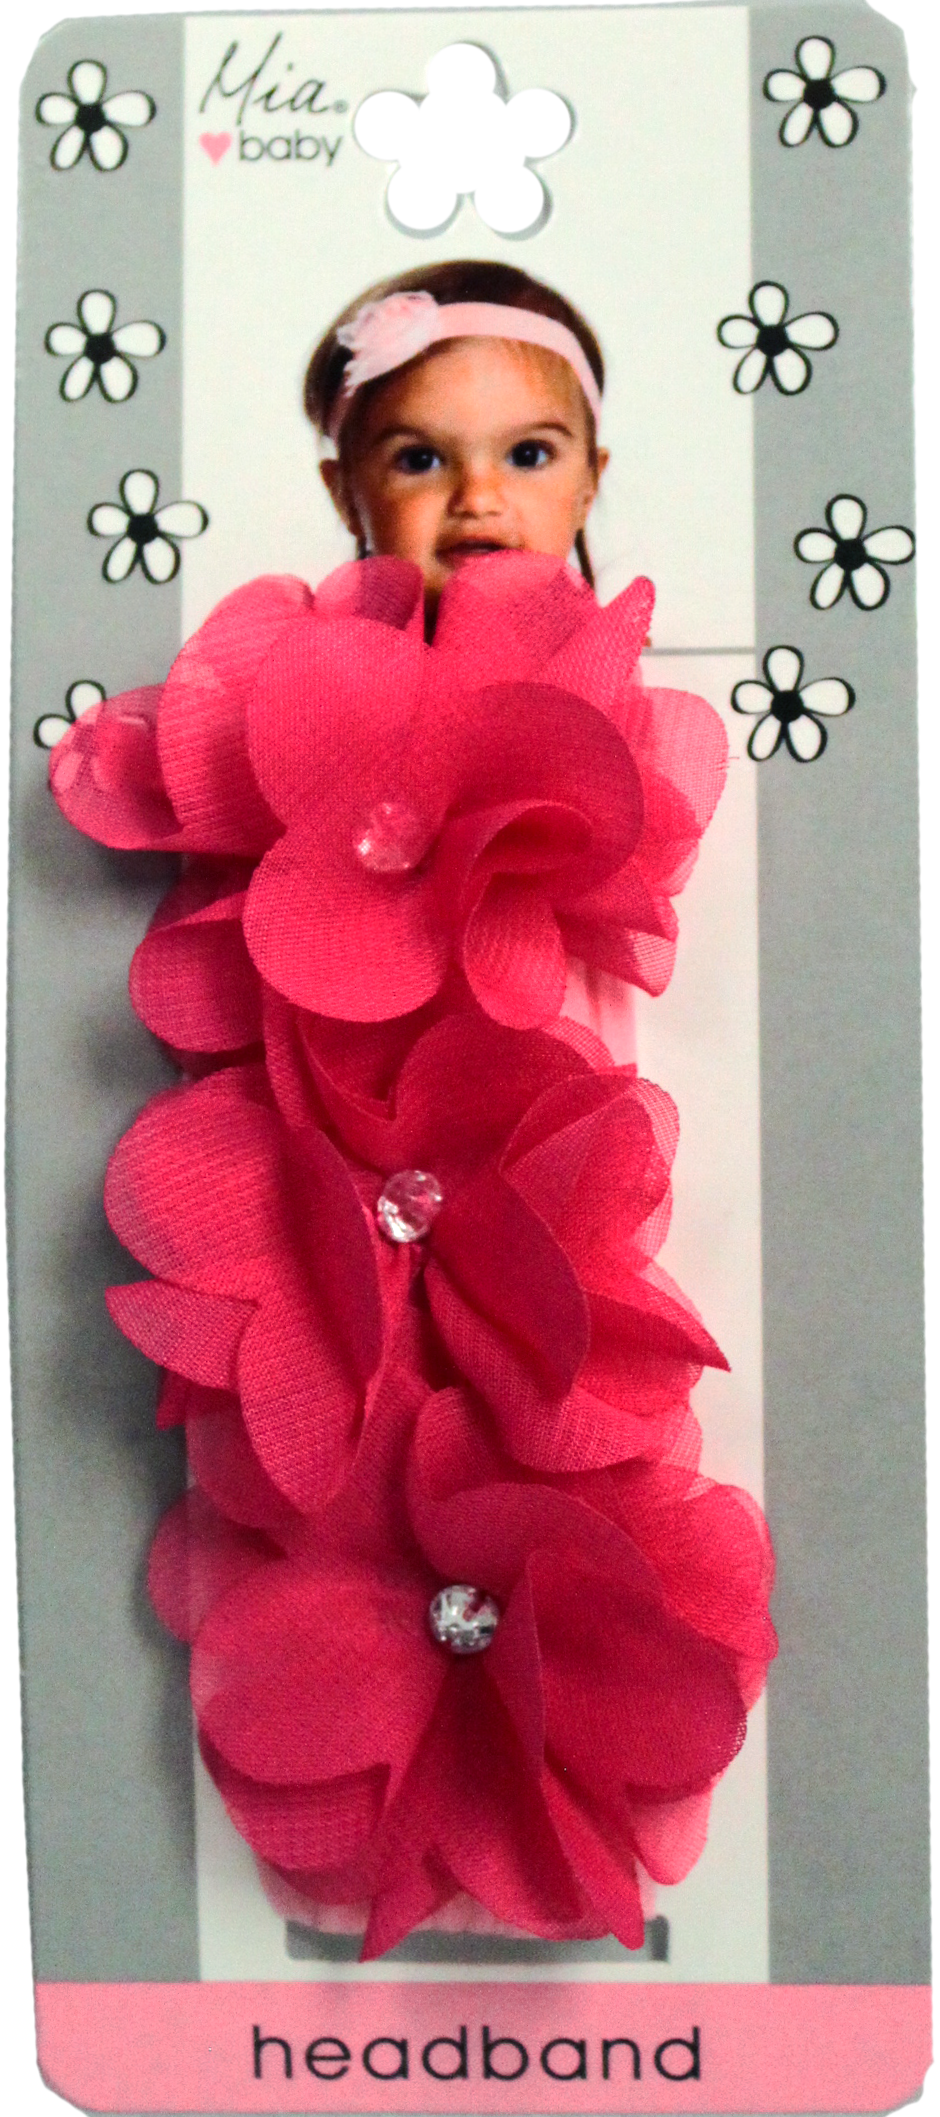 Mia® Baby Chiffon Flower Headband - light pink headband and hot pink flowers - shown on packaging - invented by #MiaKaminski #MiaBeauty #Mia #Beauty #Baby #hair #hairaccessories #headbands #headbandsforbabies #hairclips #hairbarrettes #love #life #girl #woman